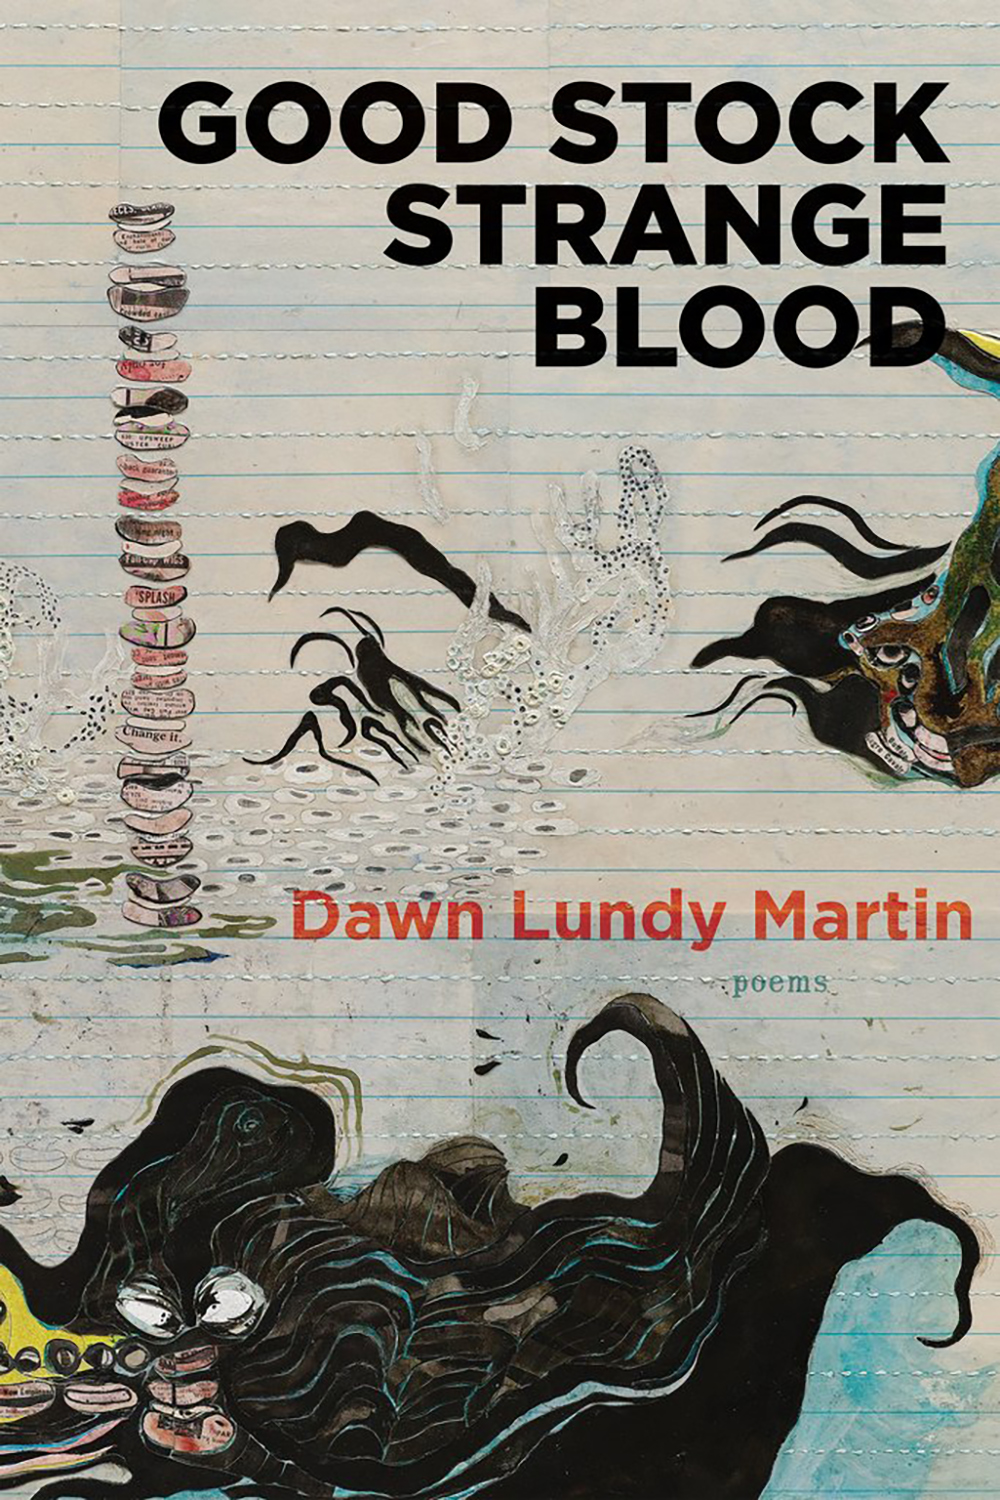 Good Stock Strange Blood, poems by Dawn Lundy Martin